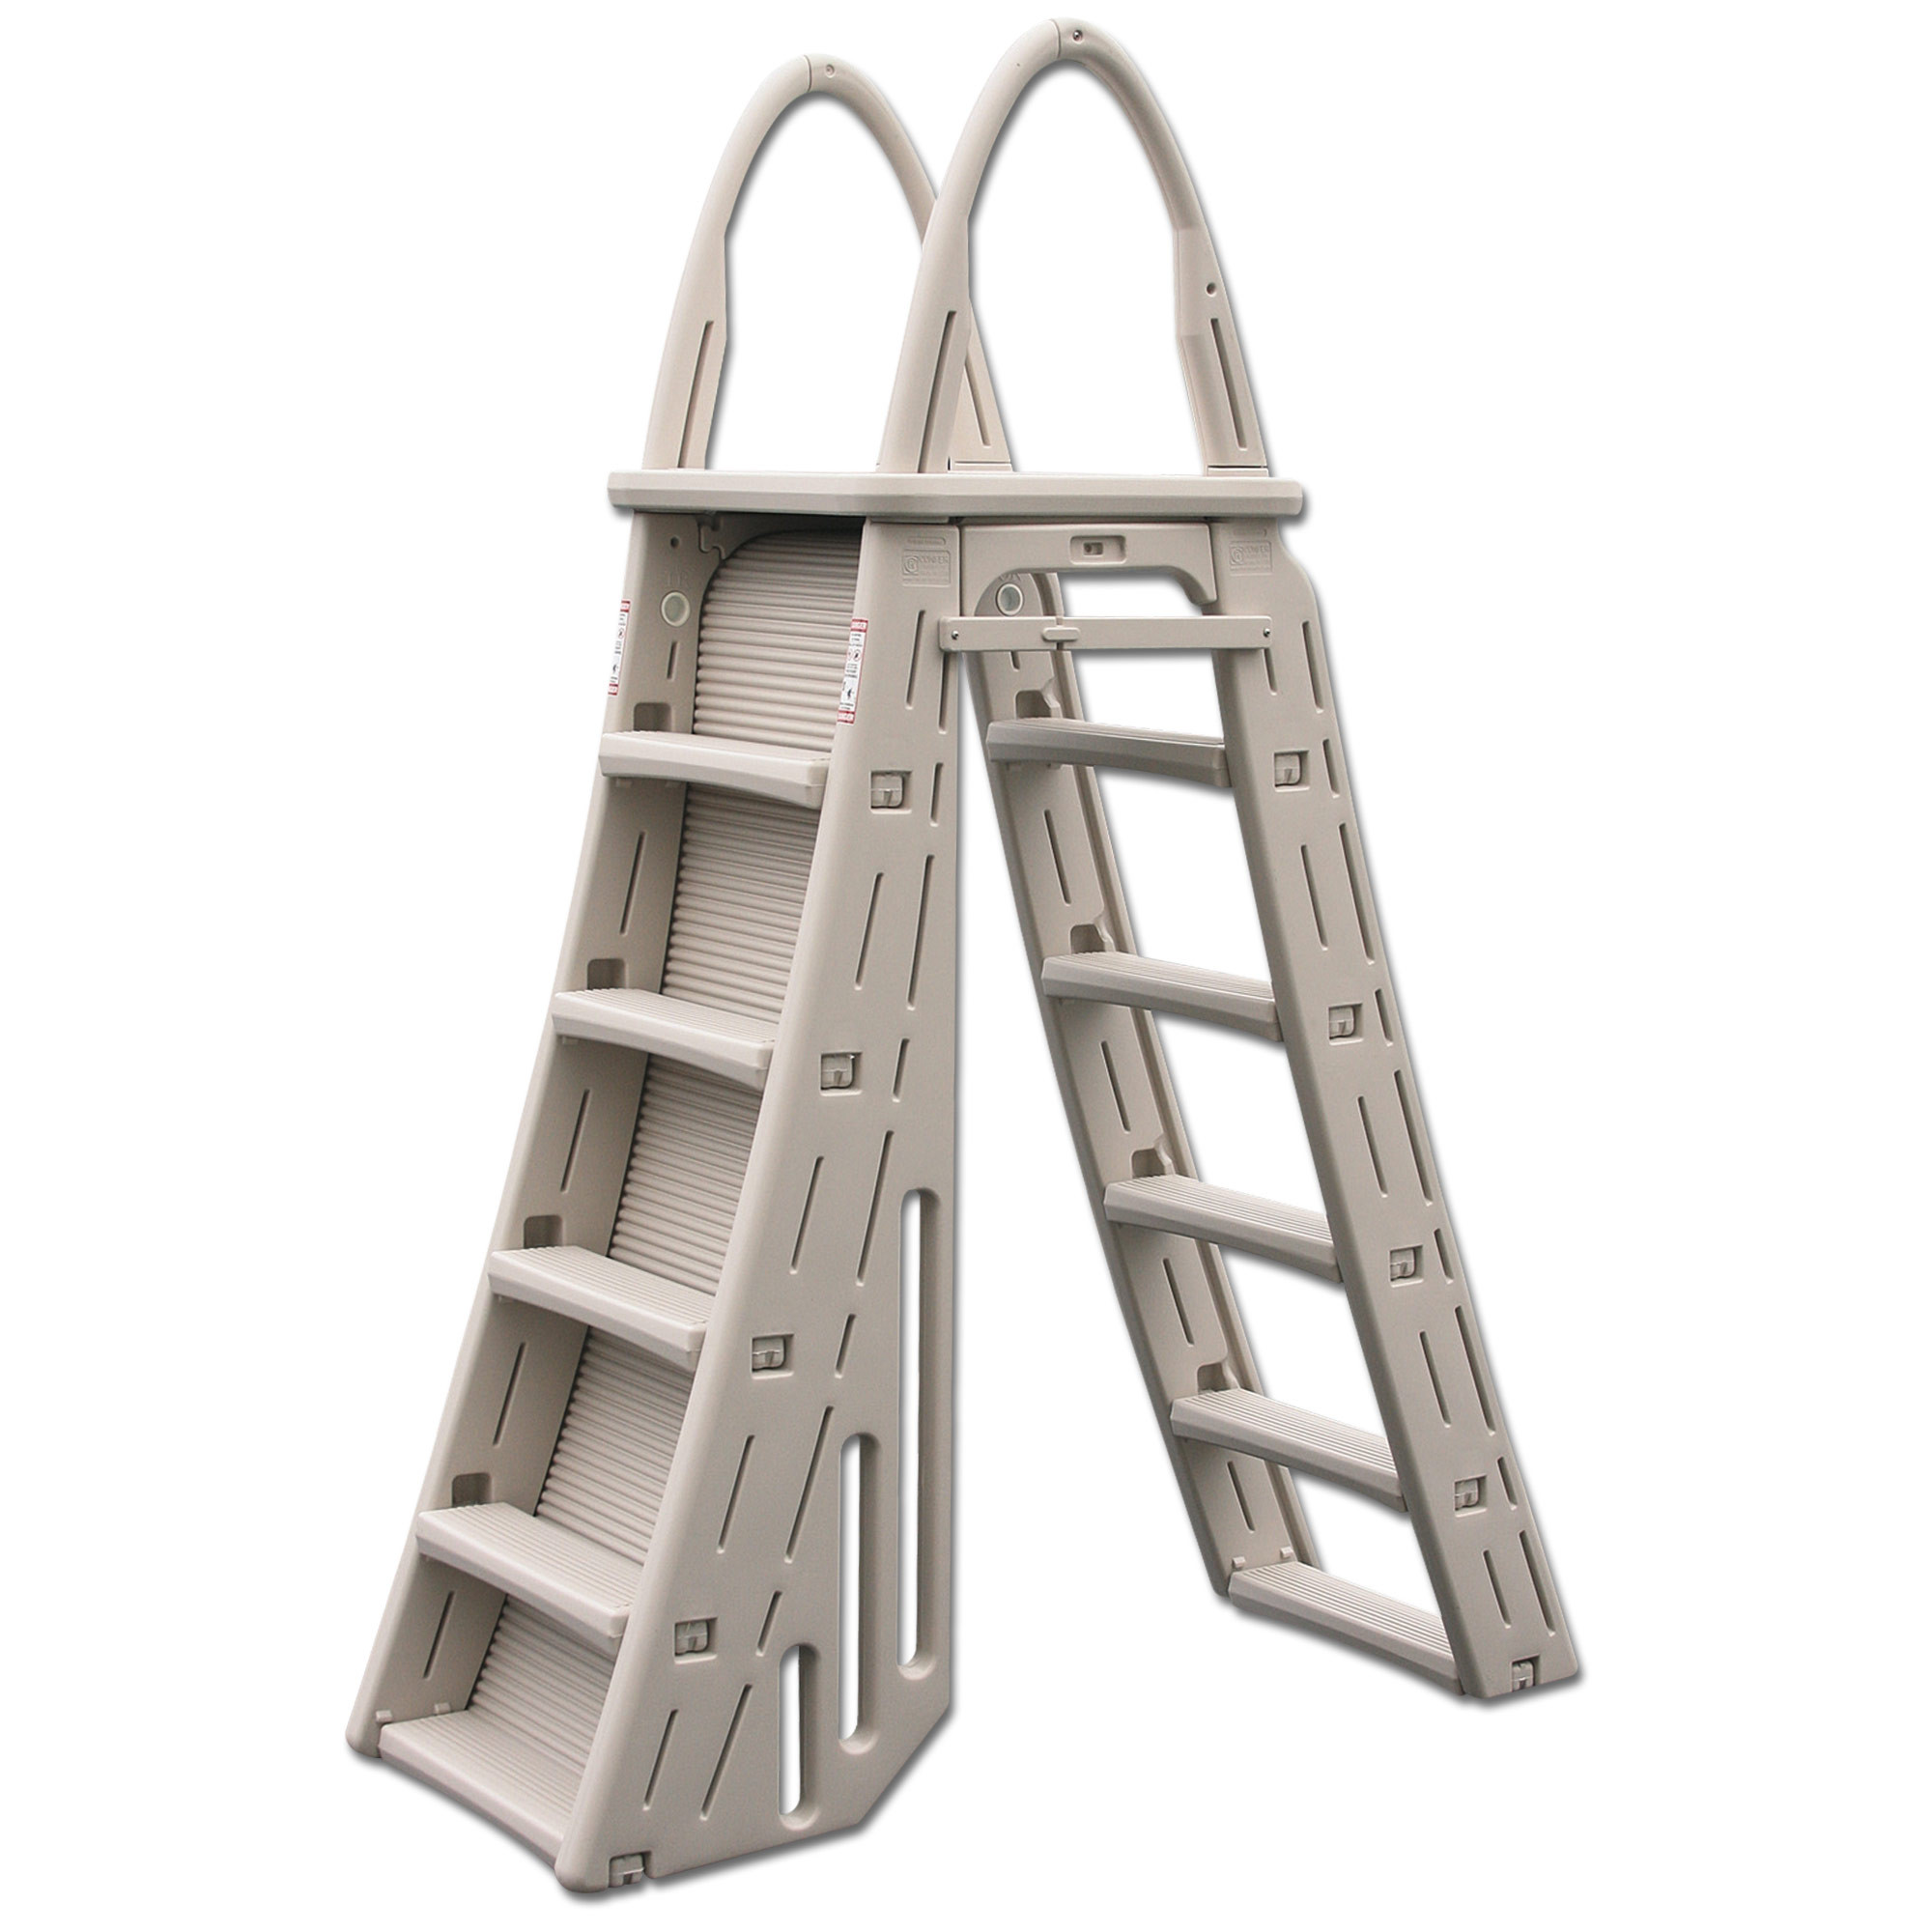 Walmart Pool Ladders Above Ground
 Confer Plastics A Frame 7200 Ground Adjustable Pool